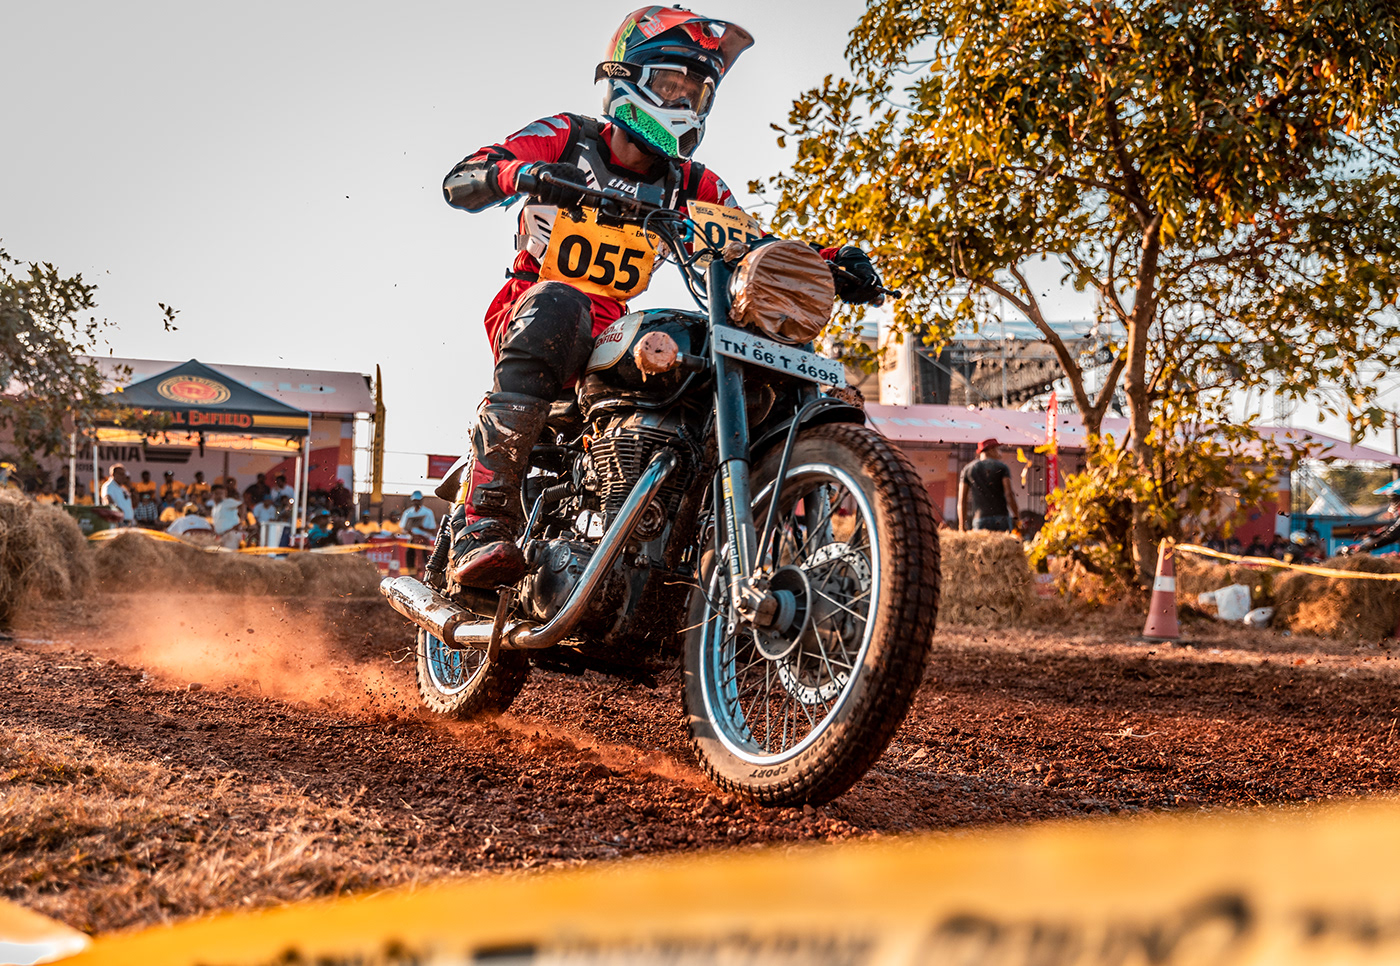 India dirt track Racing RedBull royalenfield biker race Bike motorcycle